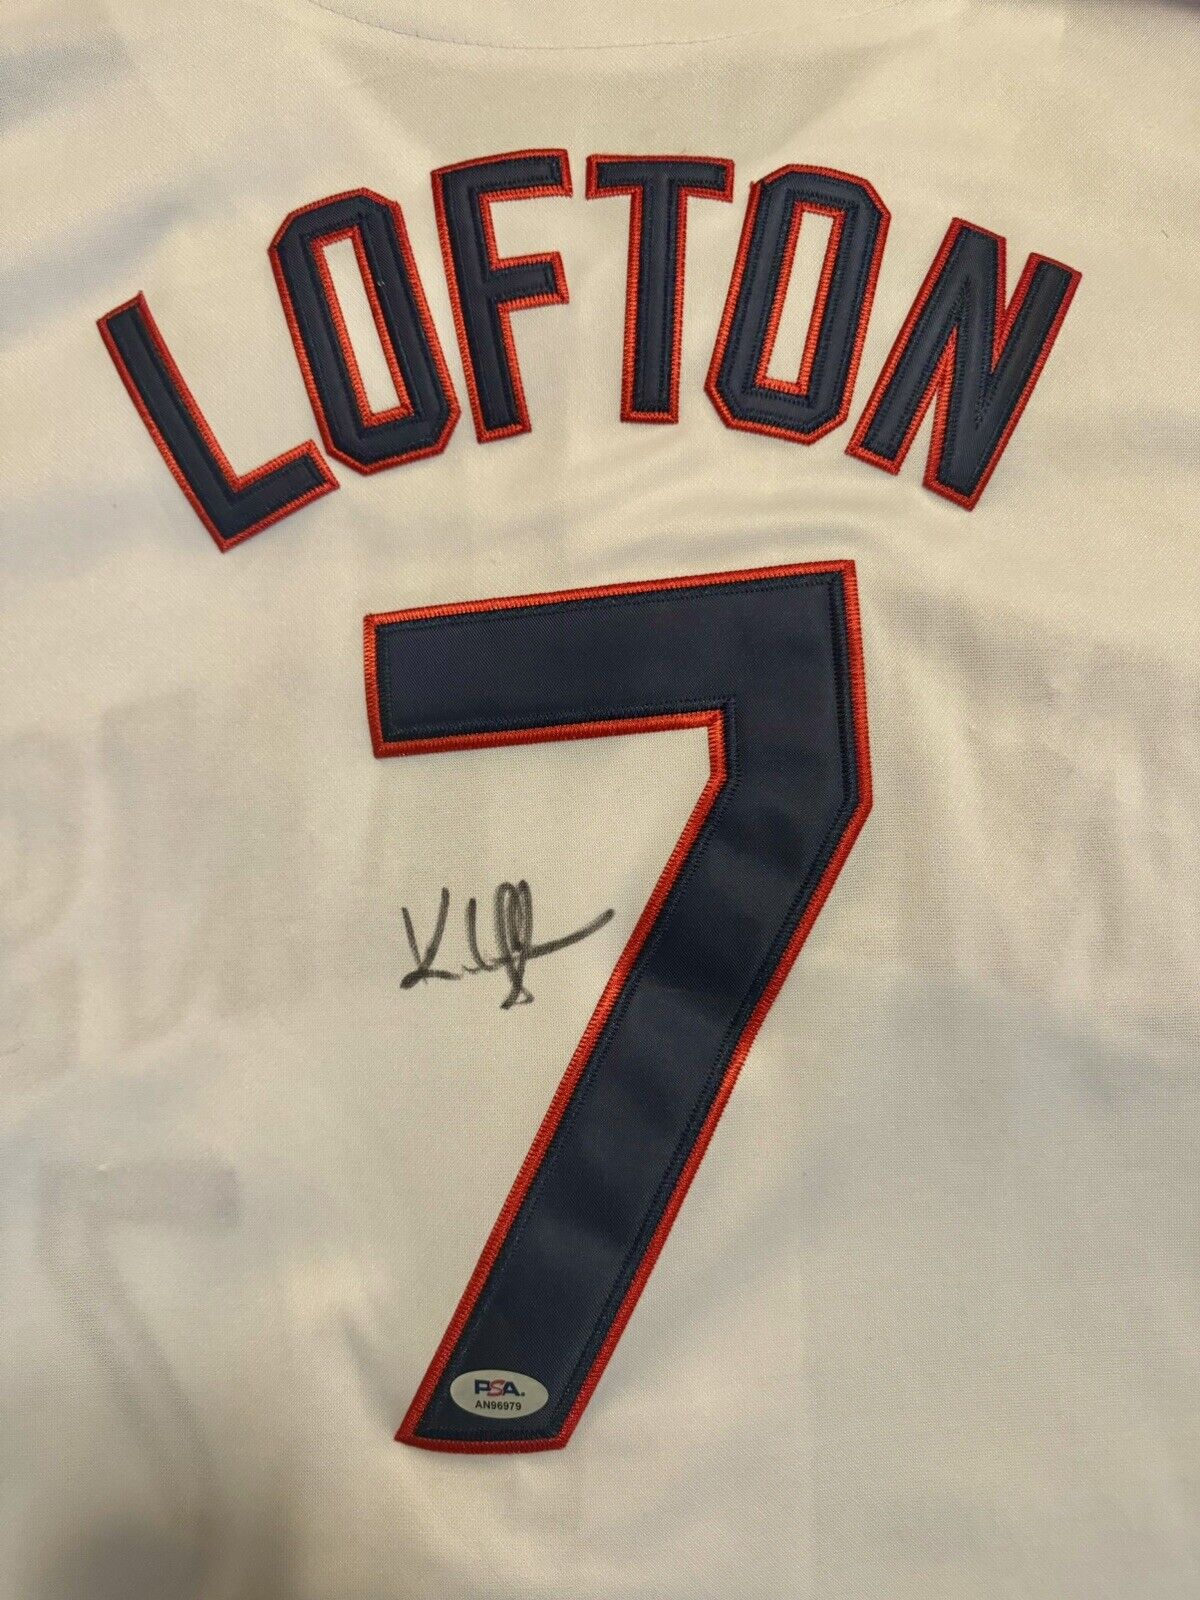 Kenny Lofton Autographed Signed Cleveland Indians Baseball Jersey (PSA/DNA)